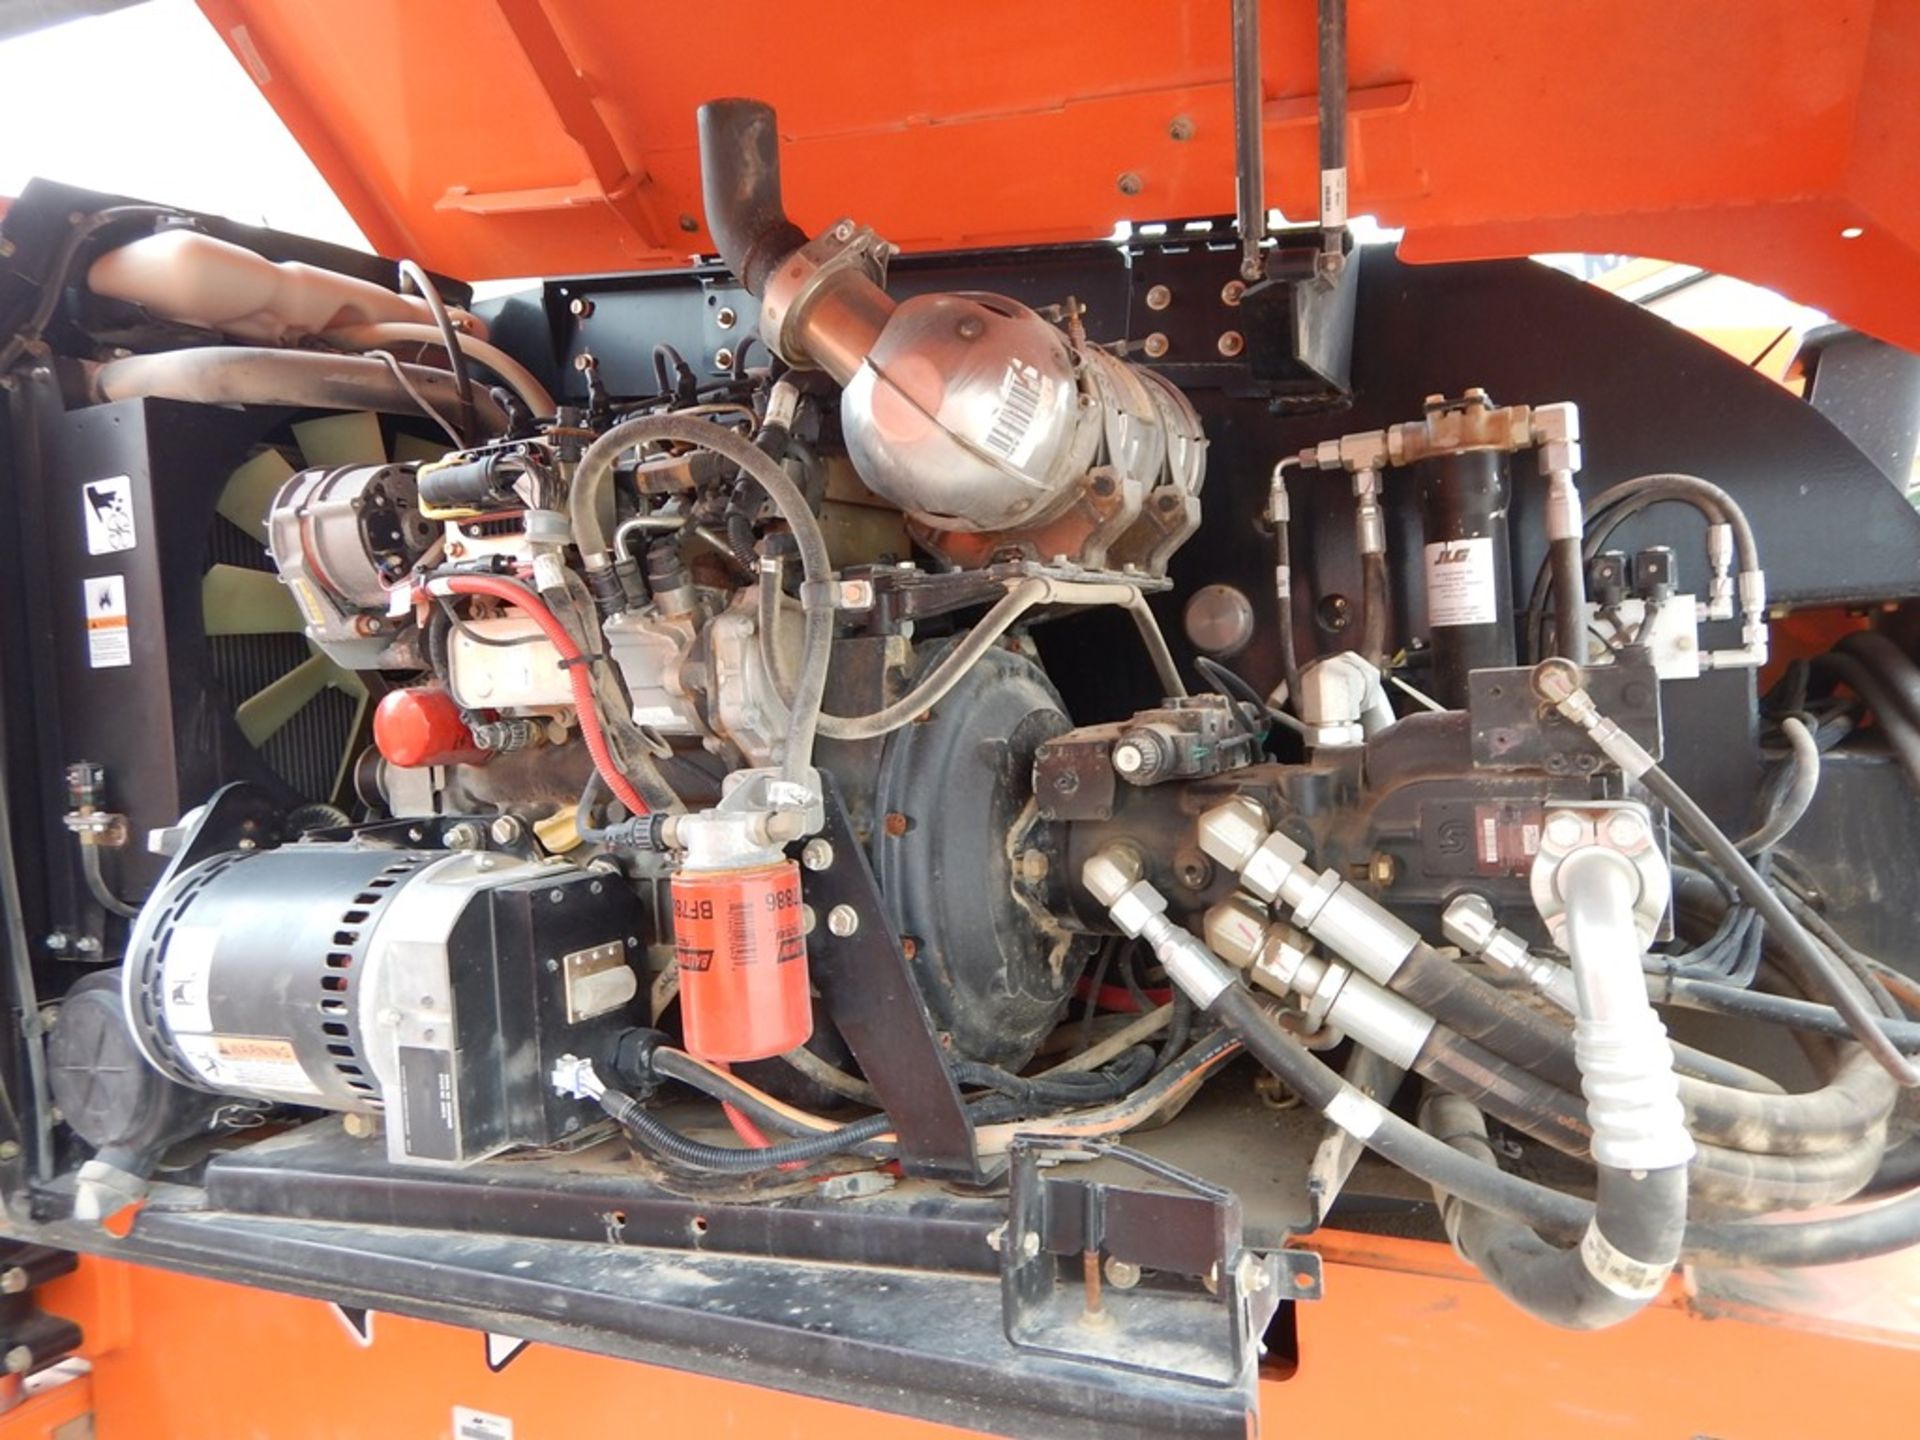 2014 JLG Model 860SJ Manlift 2,323 Hours | 86', 4WD, DIESEL ENGINE, 15-625NHS TIRE, VIN# 300183642 - Image 6 of 6